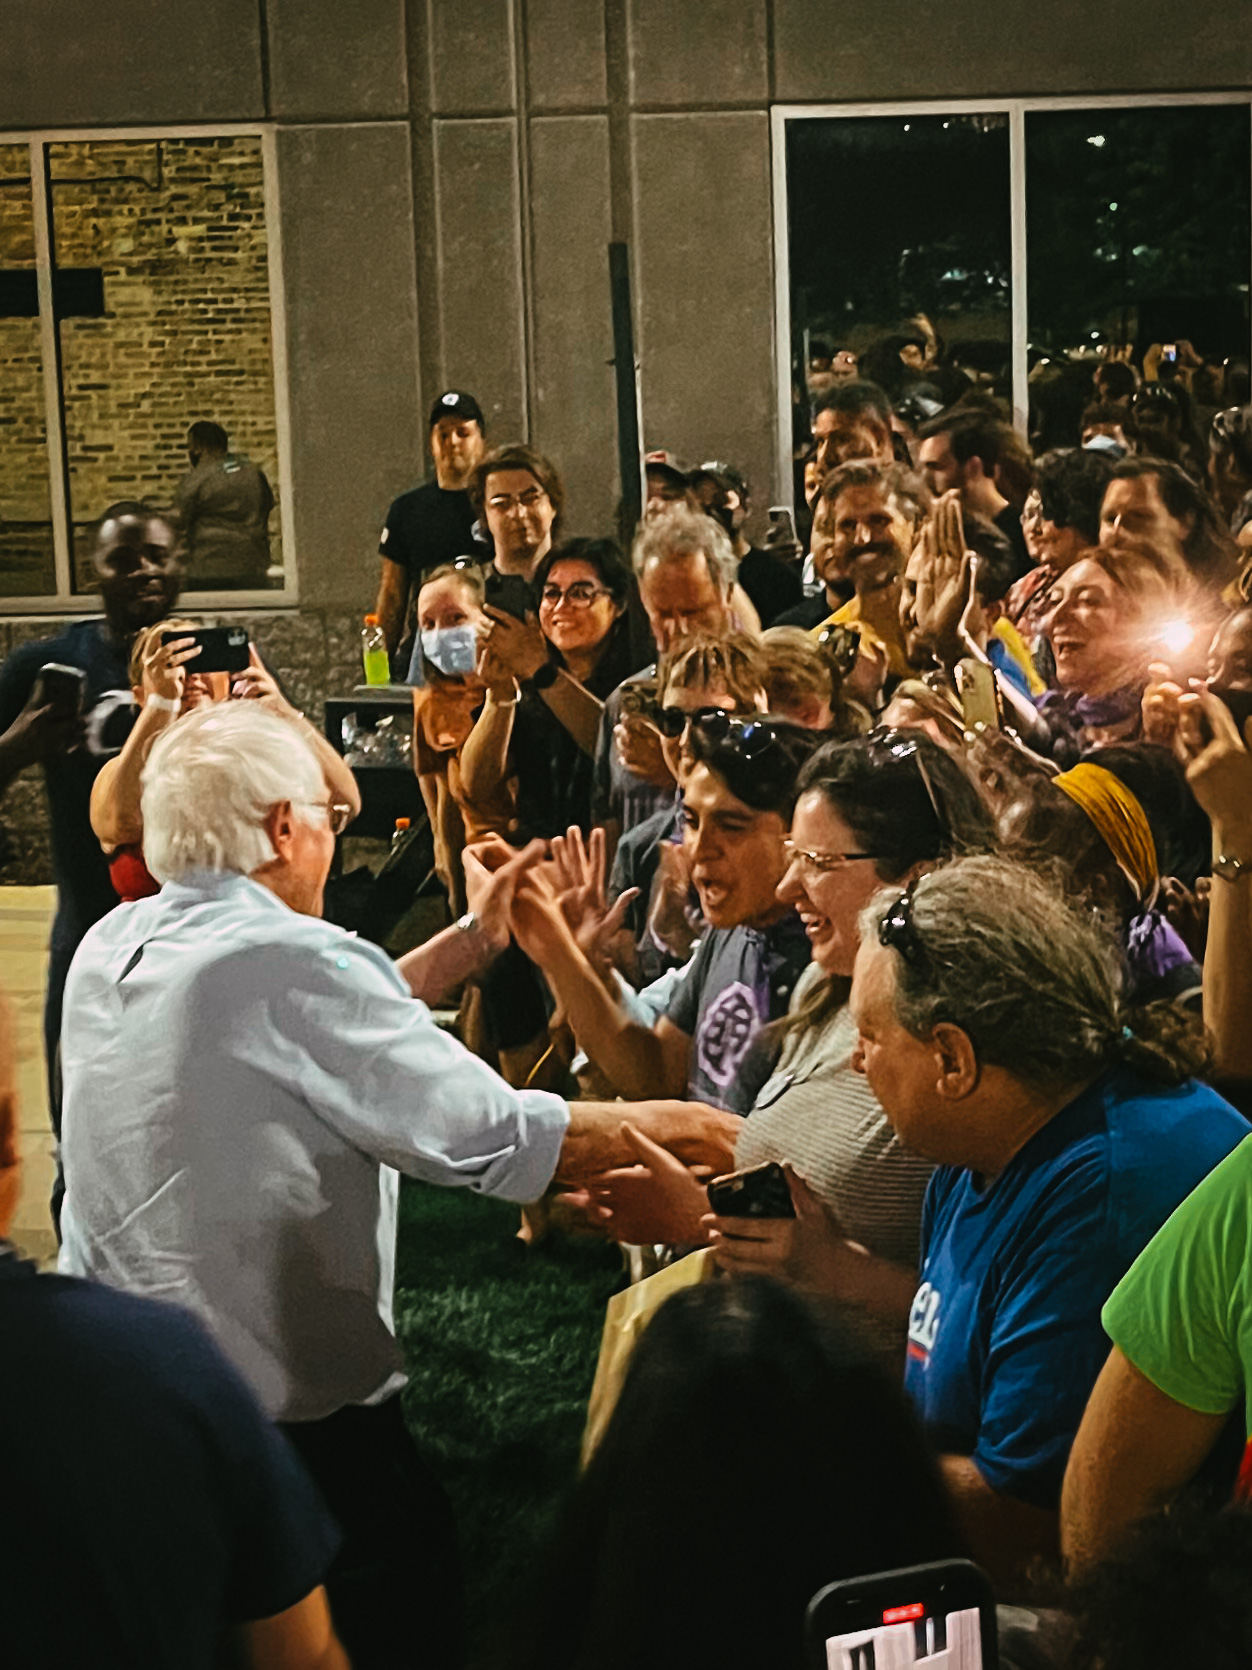 Bernie speaking with rallygoers